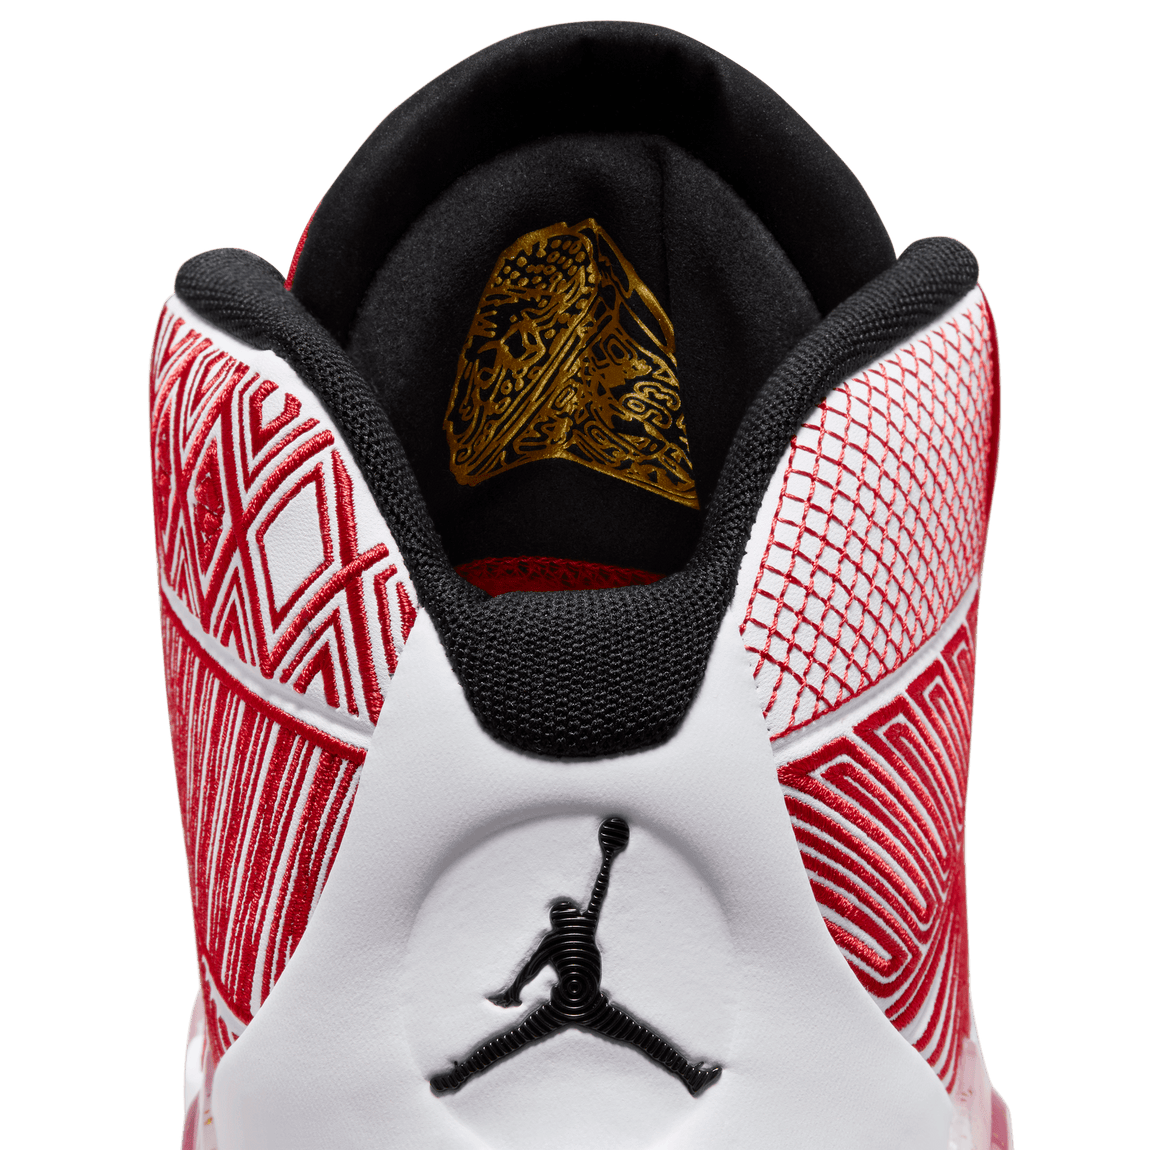 Air Jordan XXXVIII (White/Black-University Red-Metallic Gold) 11/7 - Air Jordan XXXVIII (White/Black-University Red-Metallic Gold) 11/7 - 